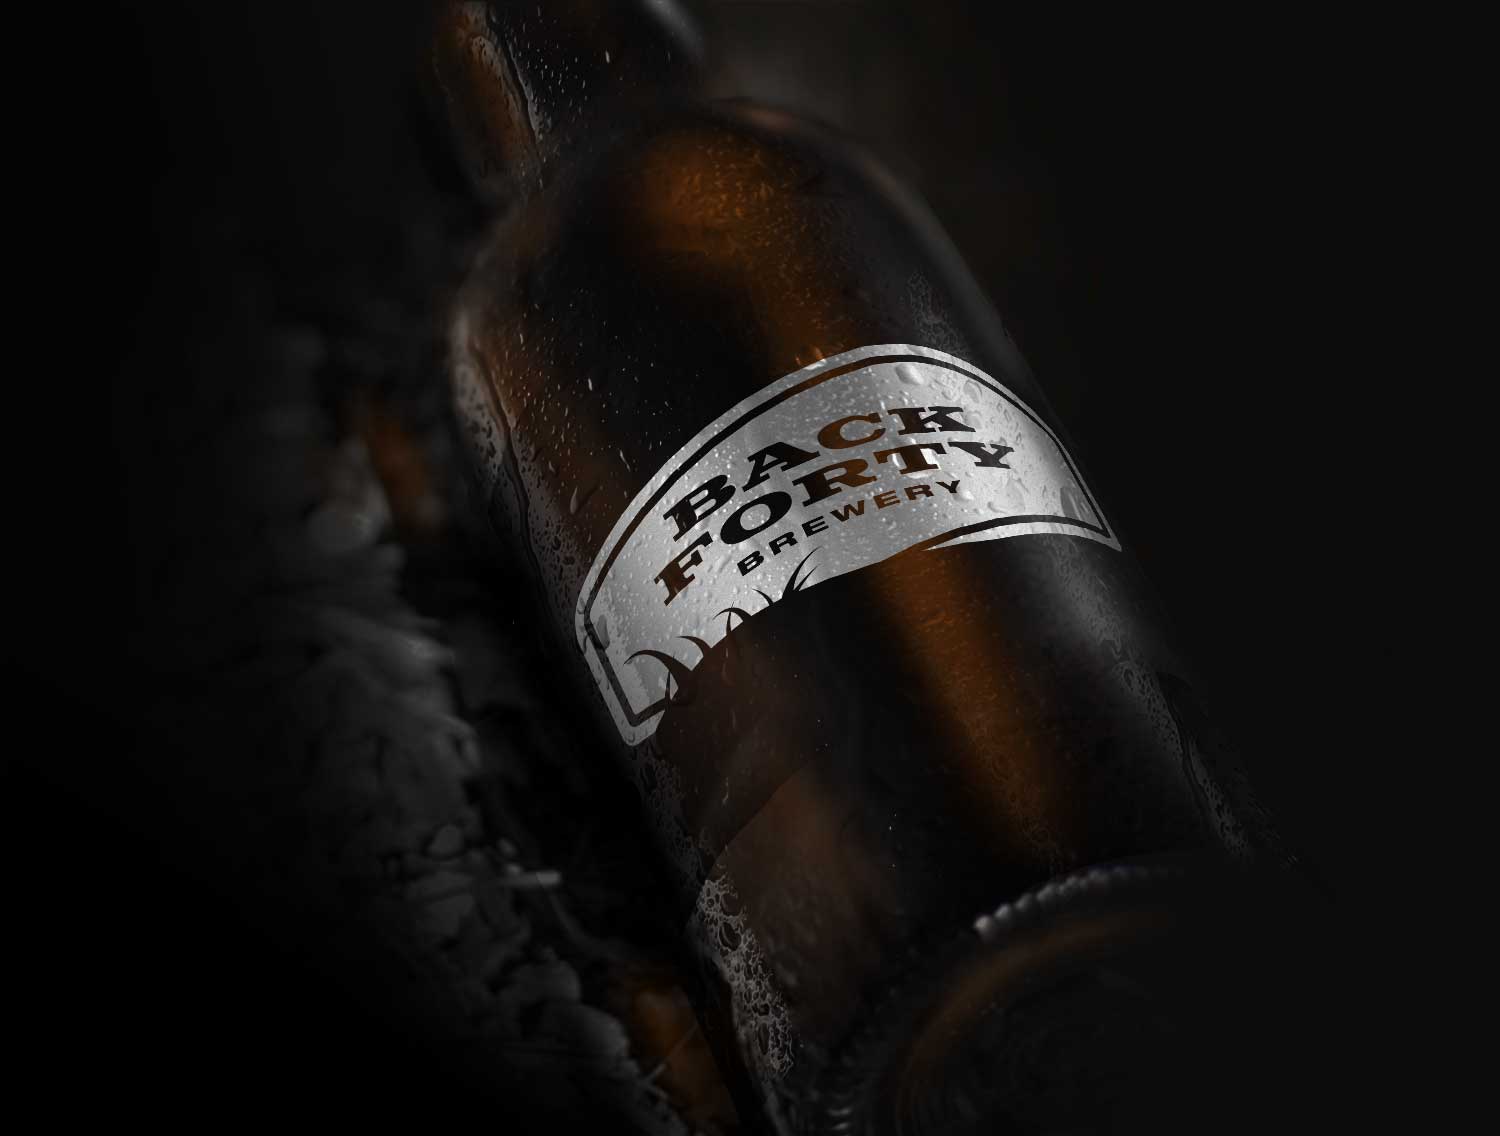 Custom designed logo for Back Forty on a beer bottle